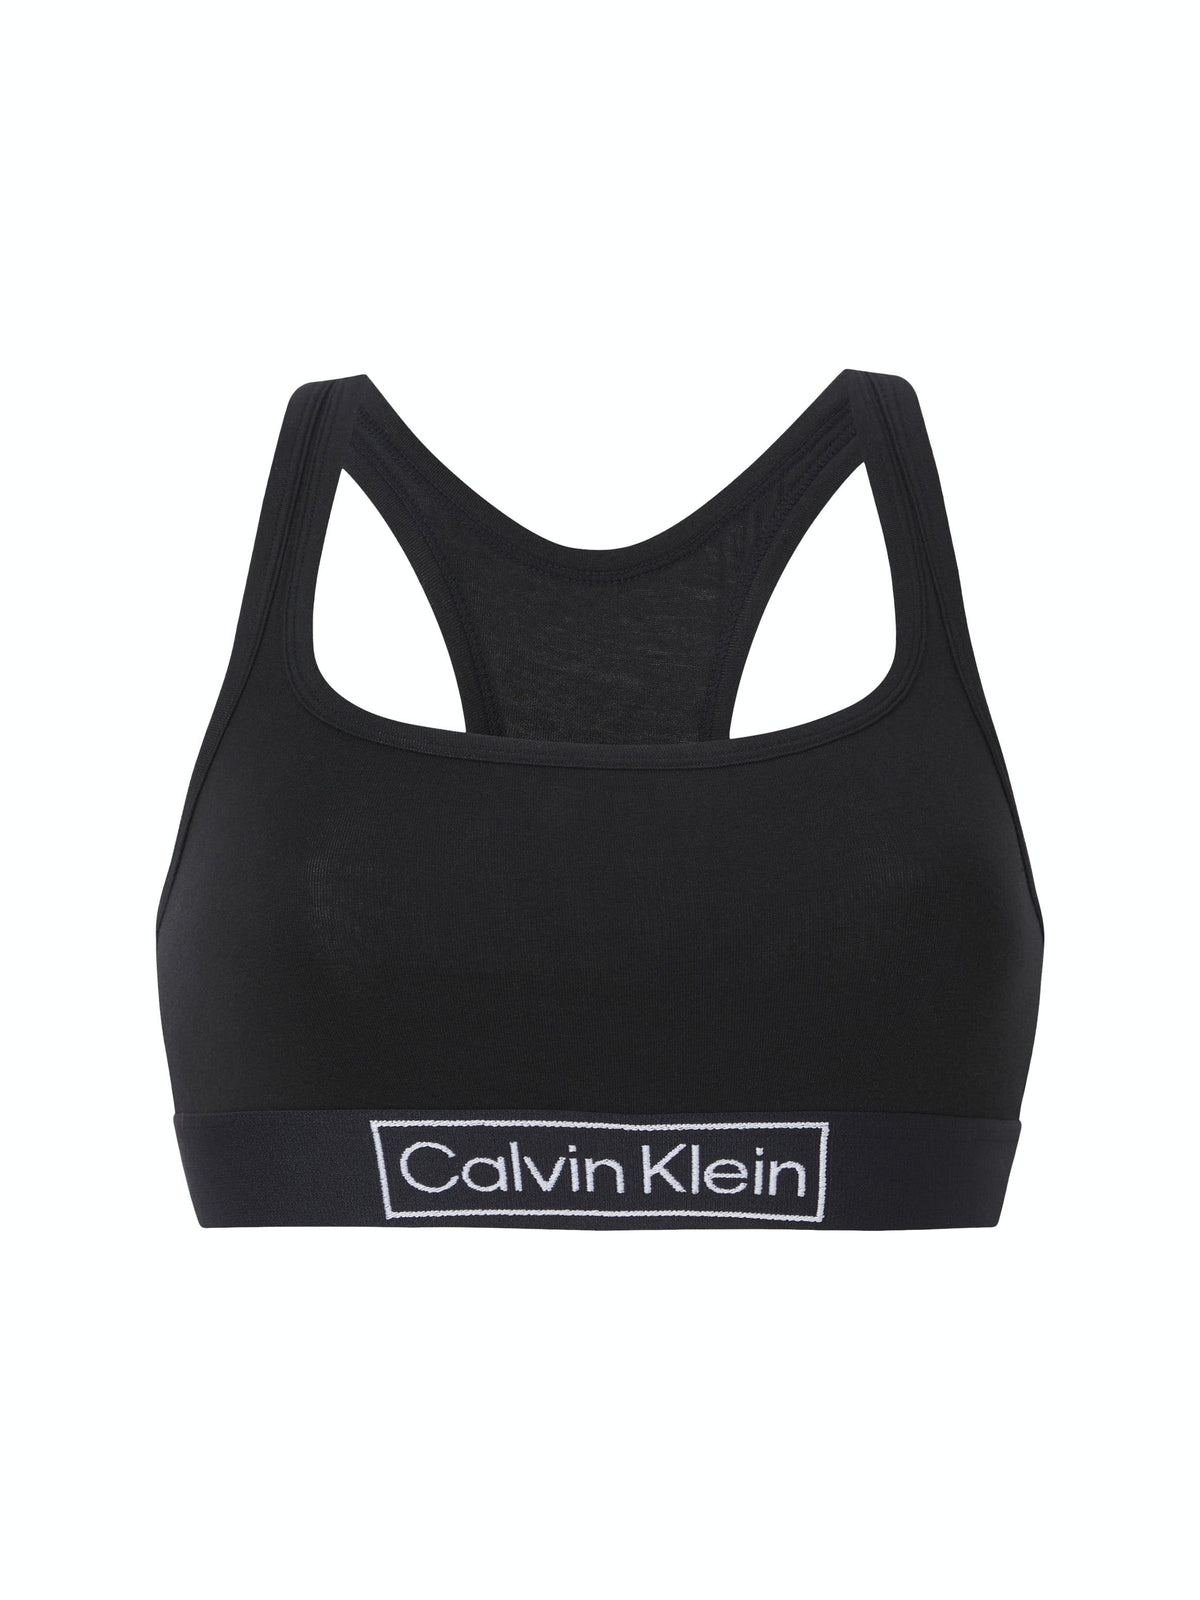 Reimagined Heritage Bralette - Calvin Klein - Splash Swimwear  - calvin klein, maternity, May22, new clothing, women clothing - Splash Swimwear 